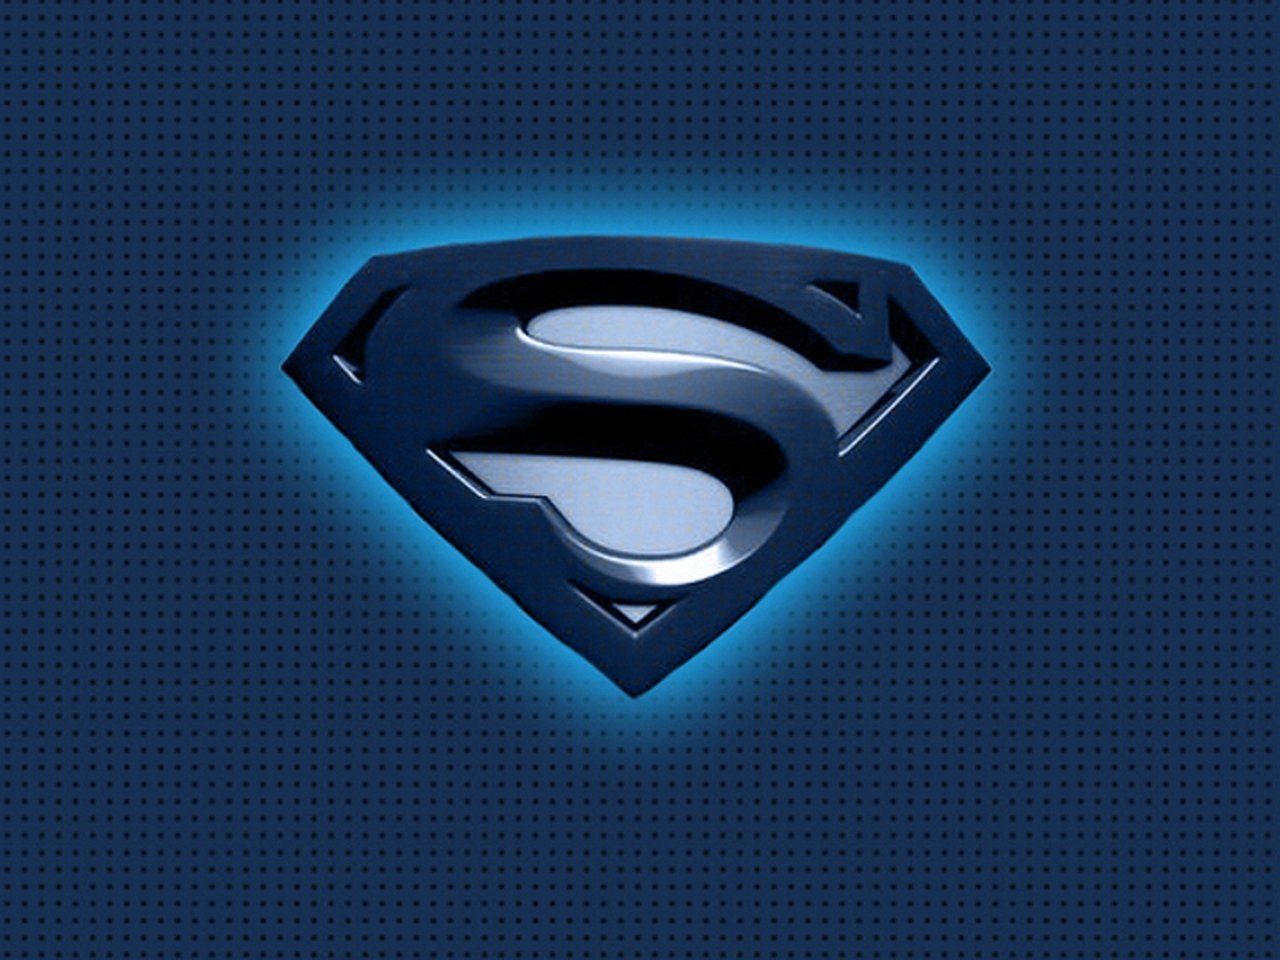 Best Superman Logo wallpaper ID:456515 for High Resolution hd 1280x960 computer